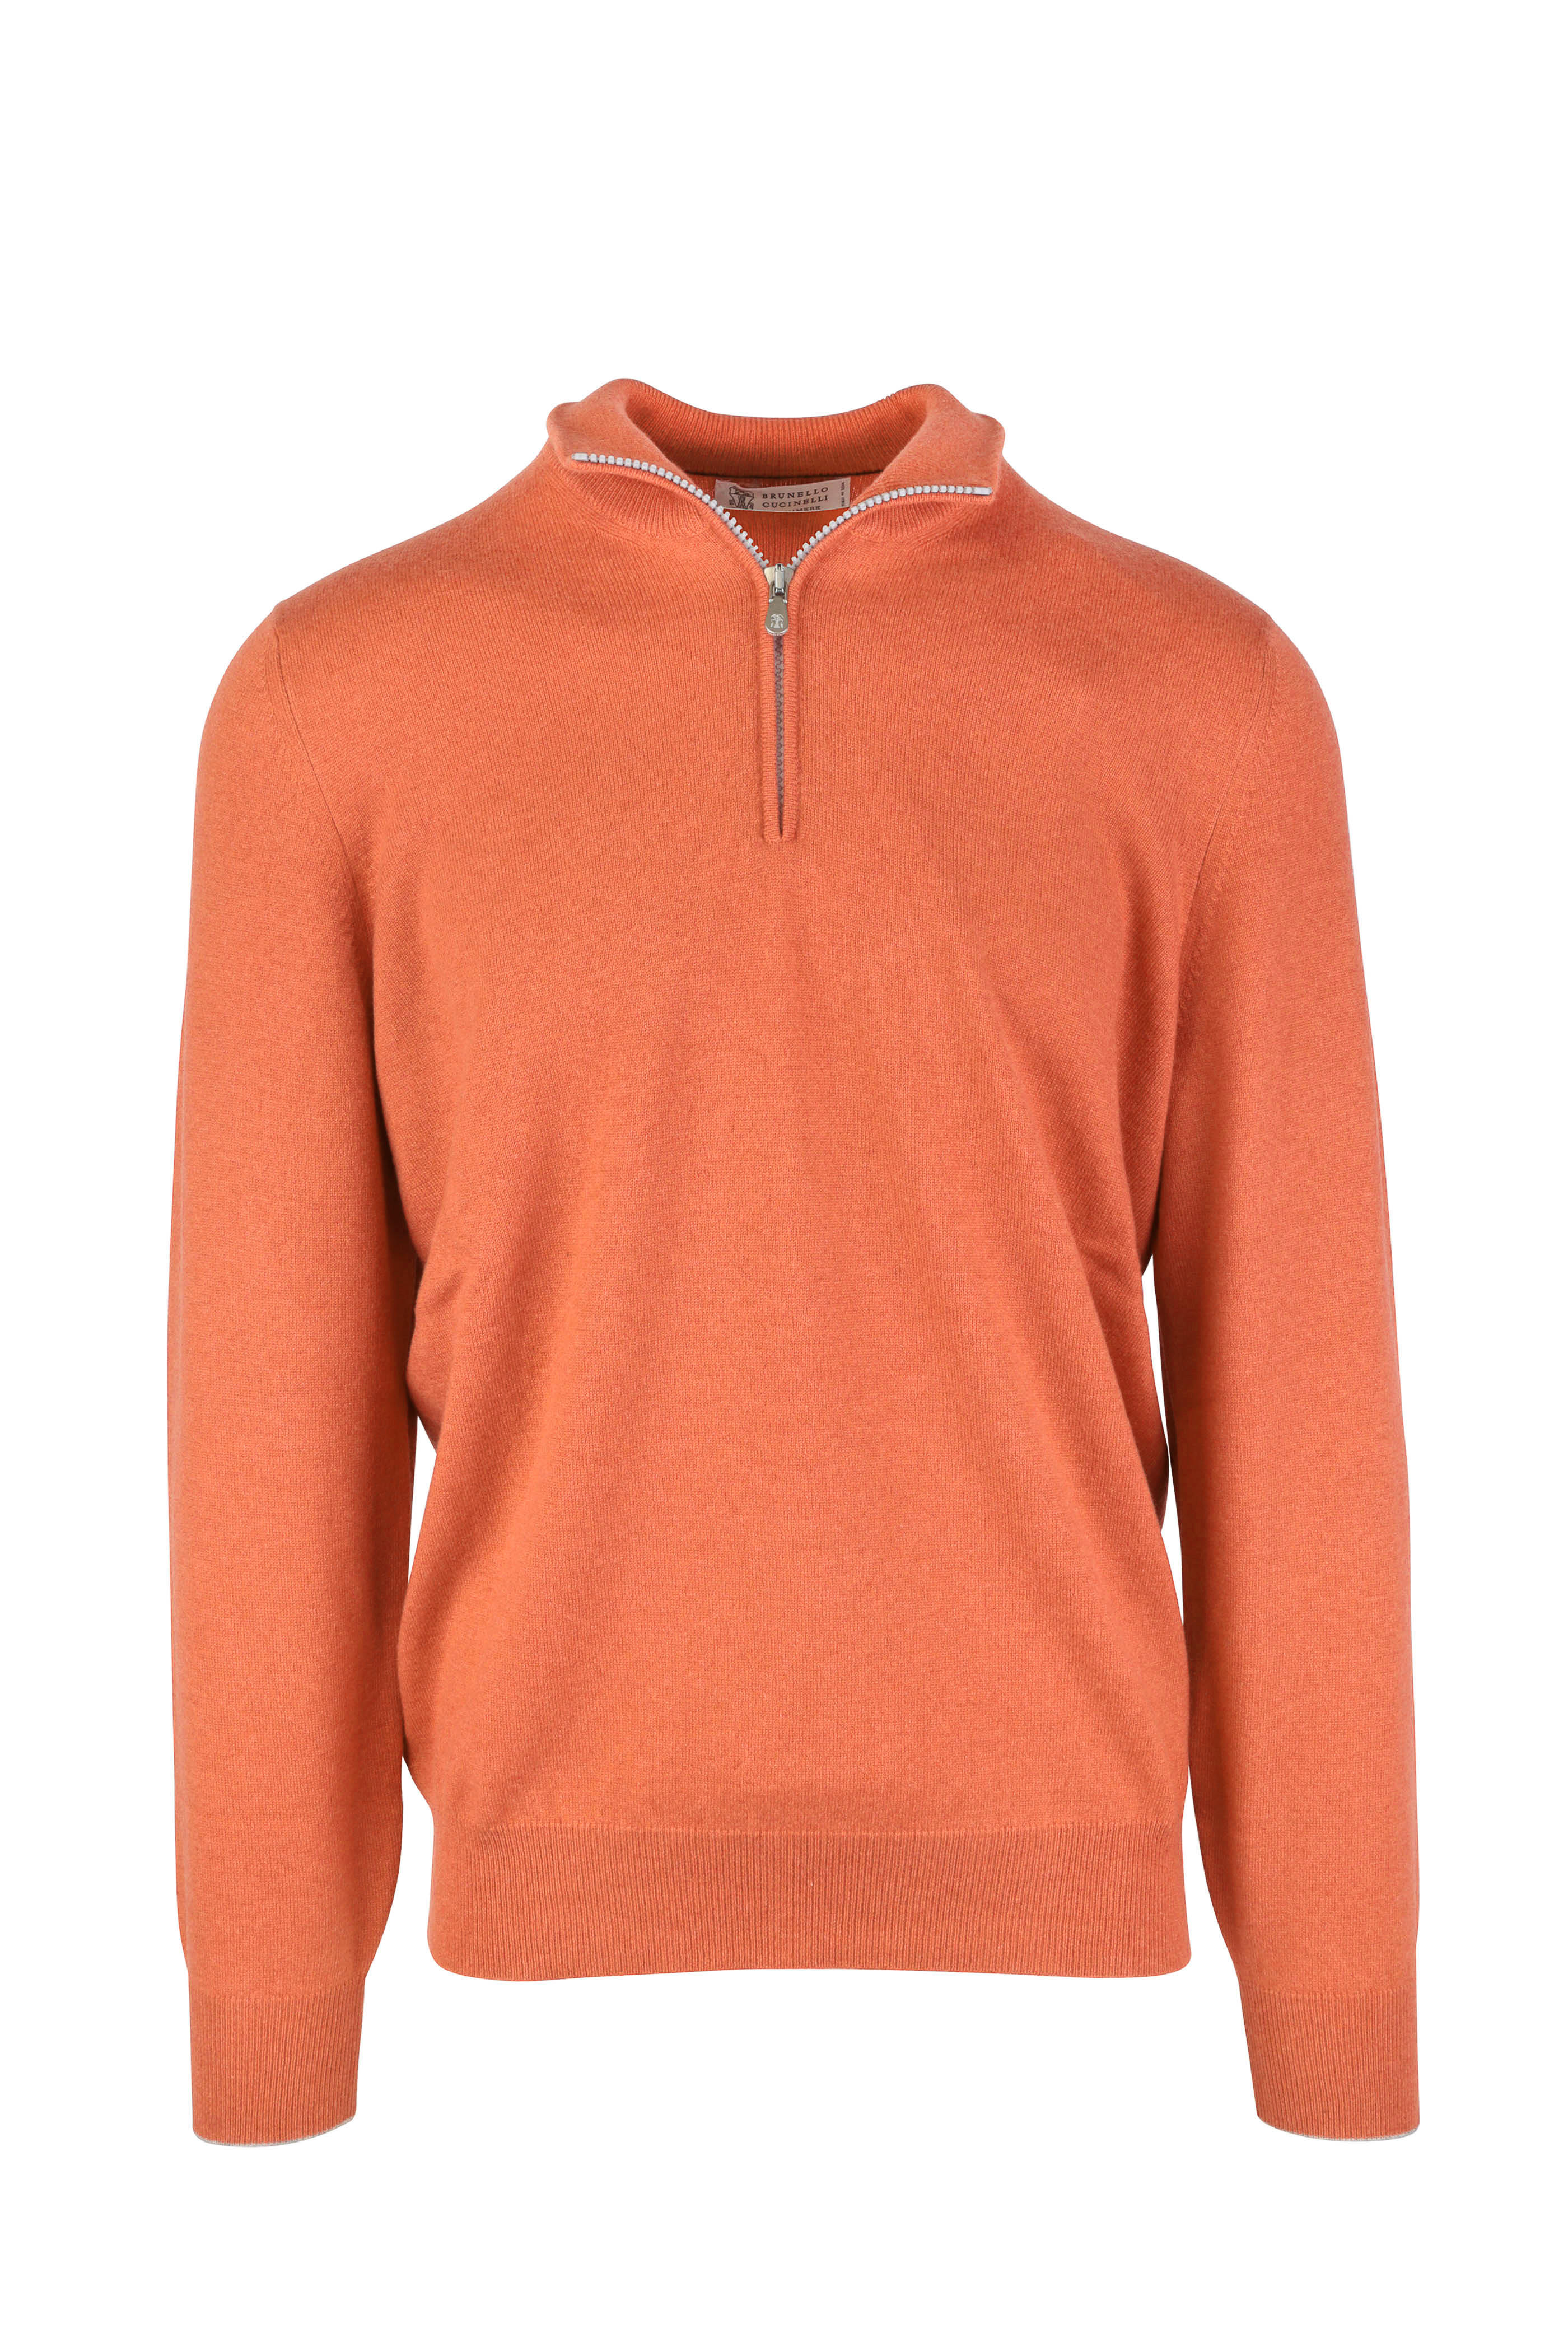 Brunello Cucinelli - Orange Cashmere Quarter-Zip Sweater